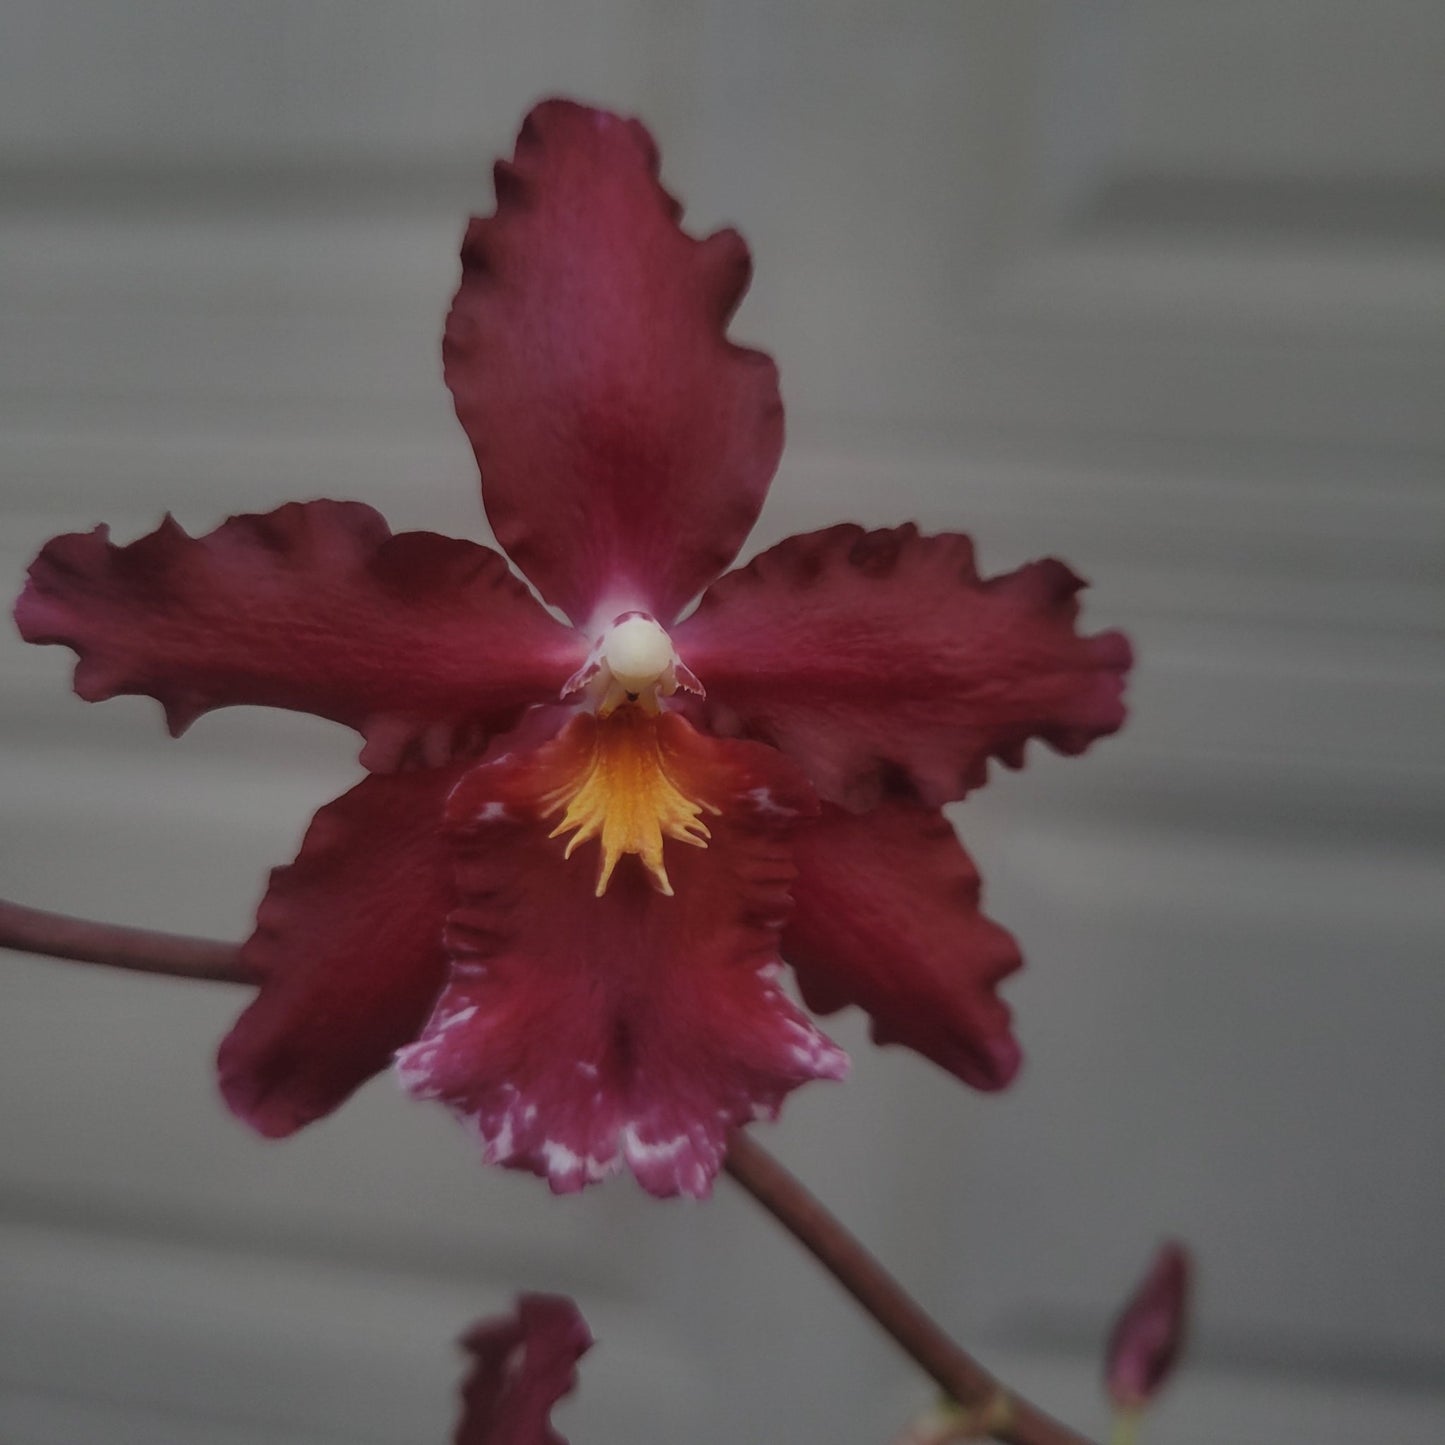 Wilsonara Pacific Lust 'Lady Chatterley' - Dr. Bill's Orchids, LLC